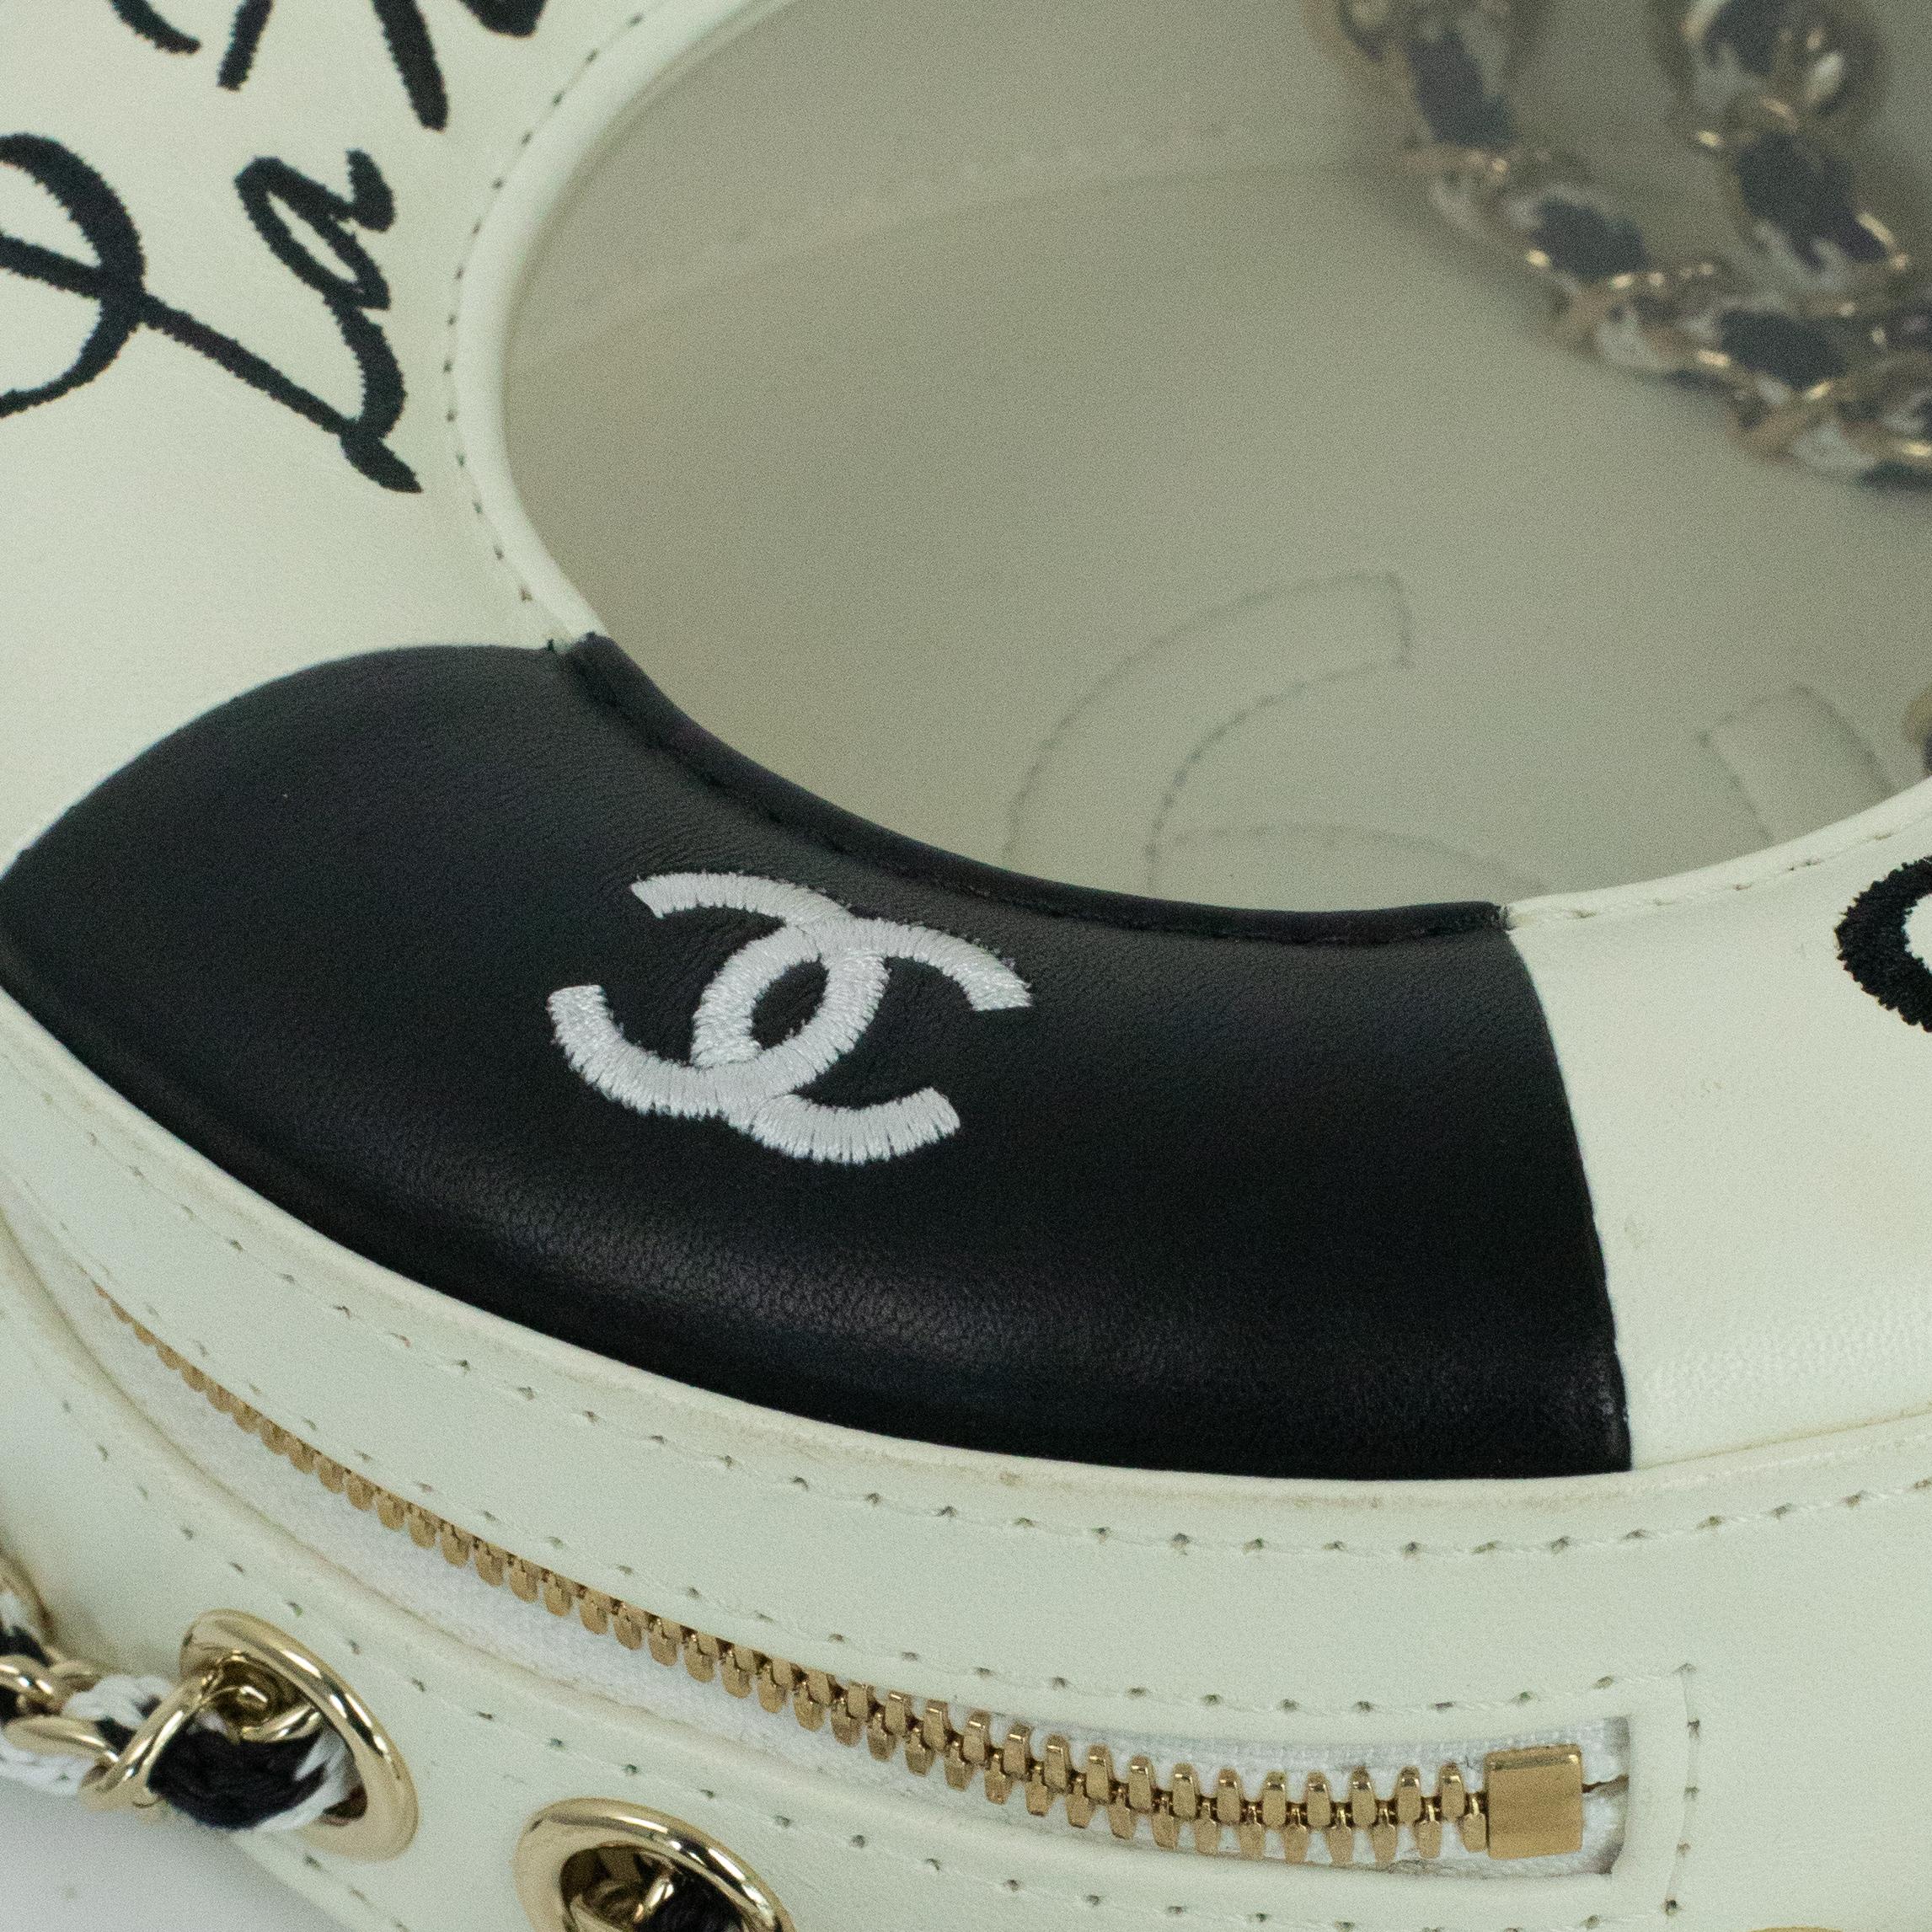 Chanel, La pausa in white leather 3